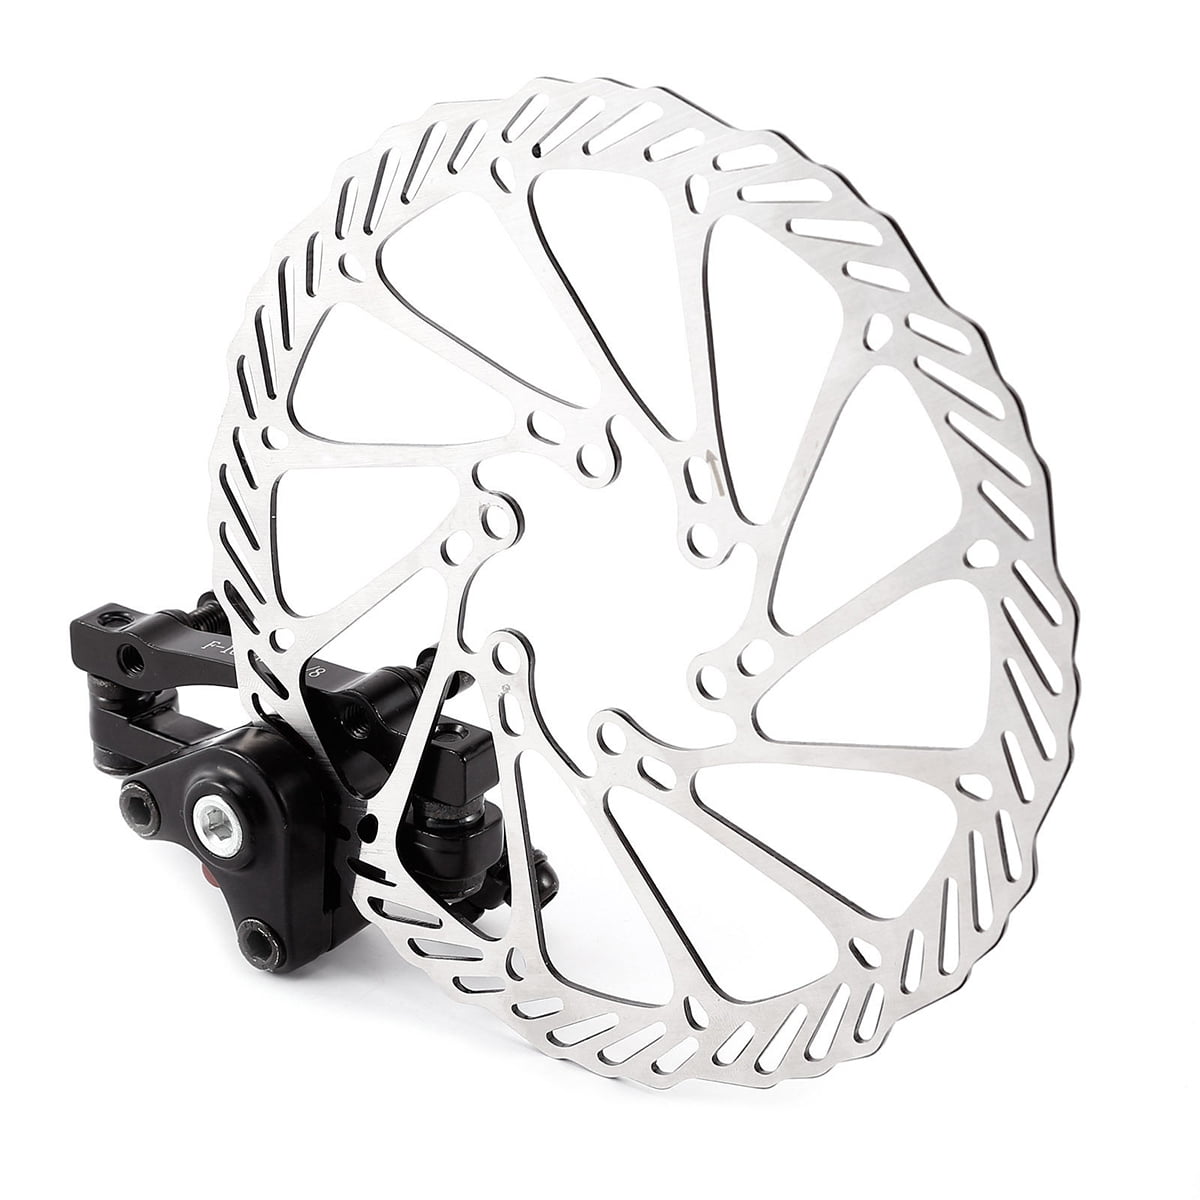 Bike Disc Brake Front Rear Disc Rotor Kit for Mountain Bicycle 160mm Free Rotor 